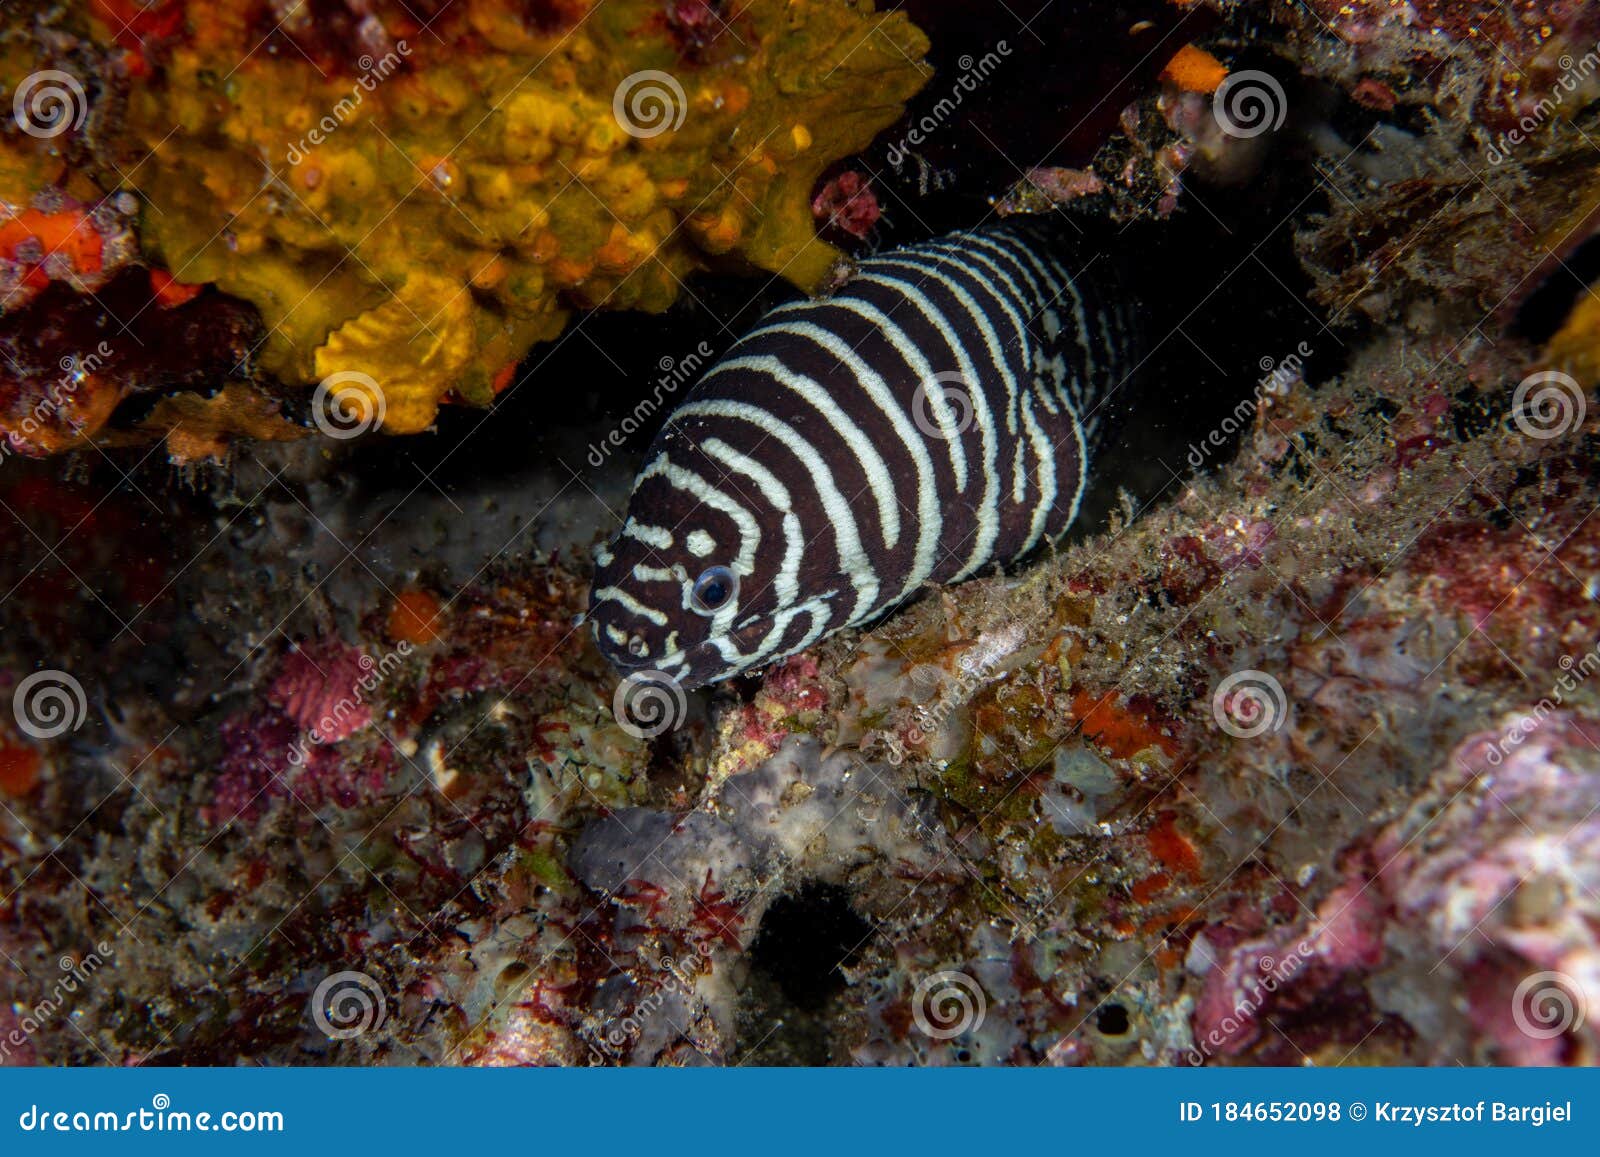 zebra moray eel, gymnomuraena zebra living in a tropical coral reef of similan islands thailand.